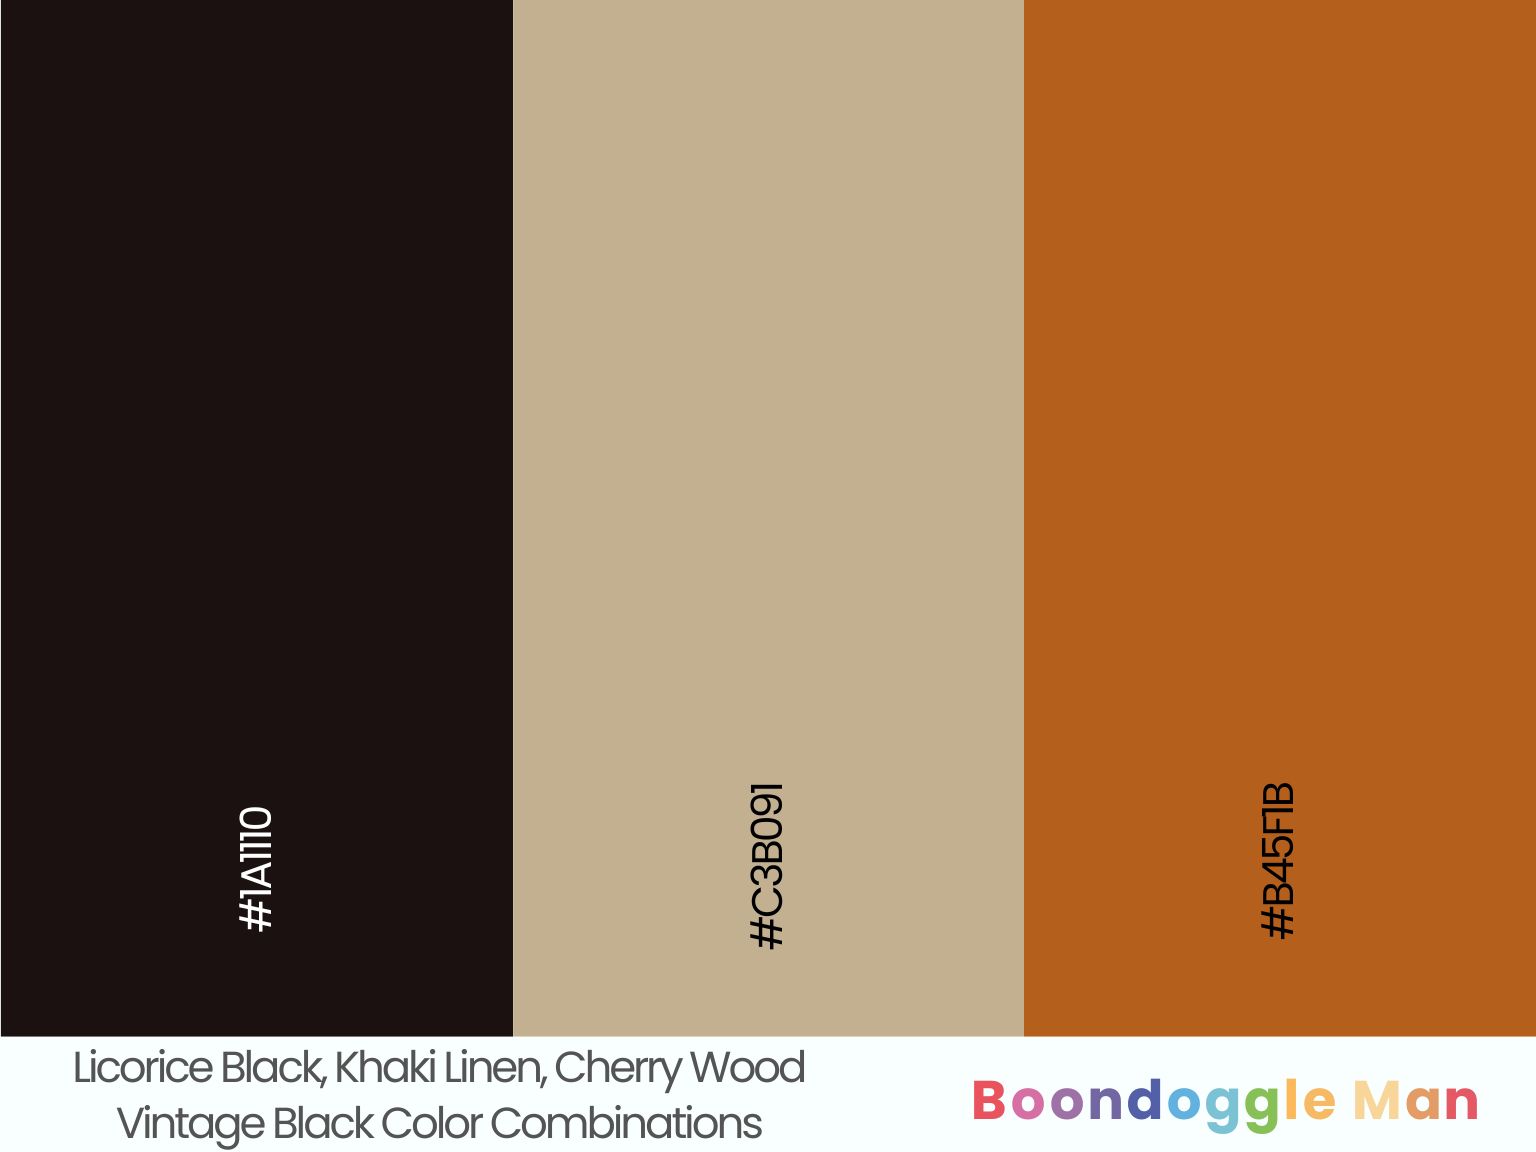 Licorice Black, Khaki Linen, Cherry Wood